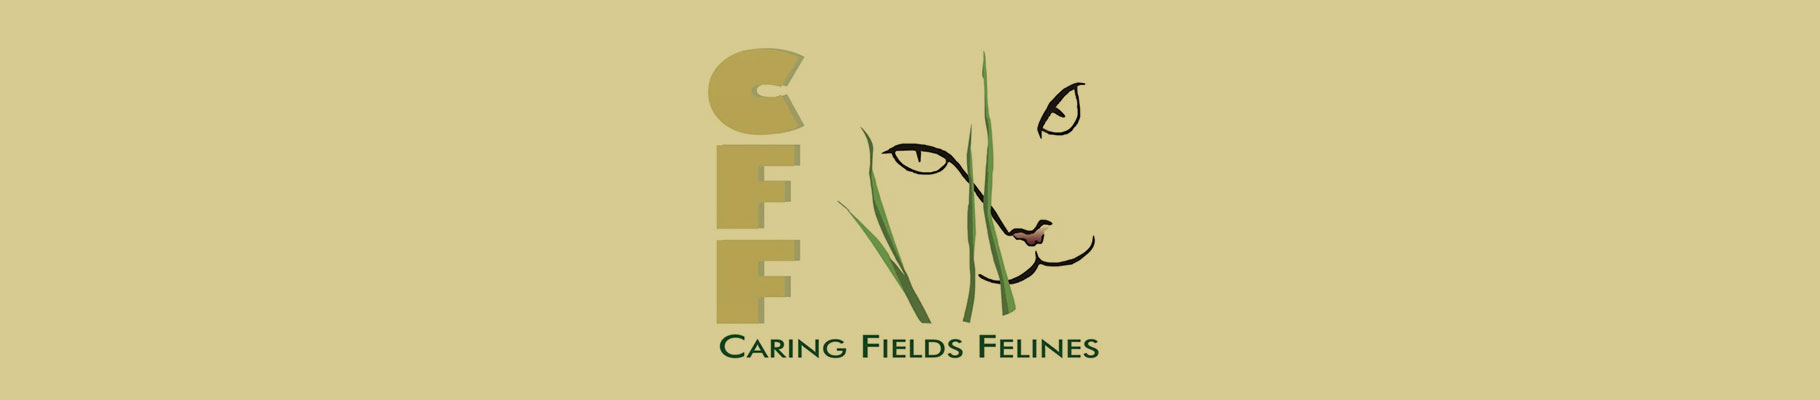 Caring Fields Felines – Local Charity Spotlight